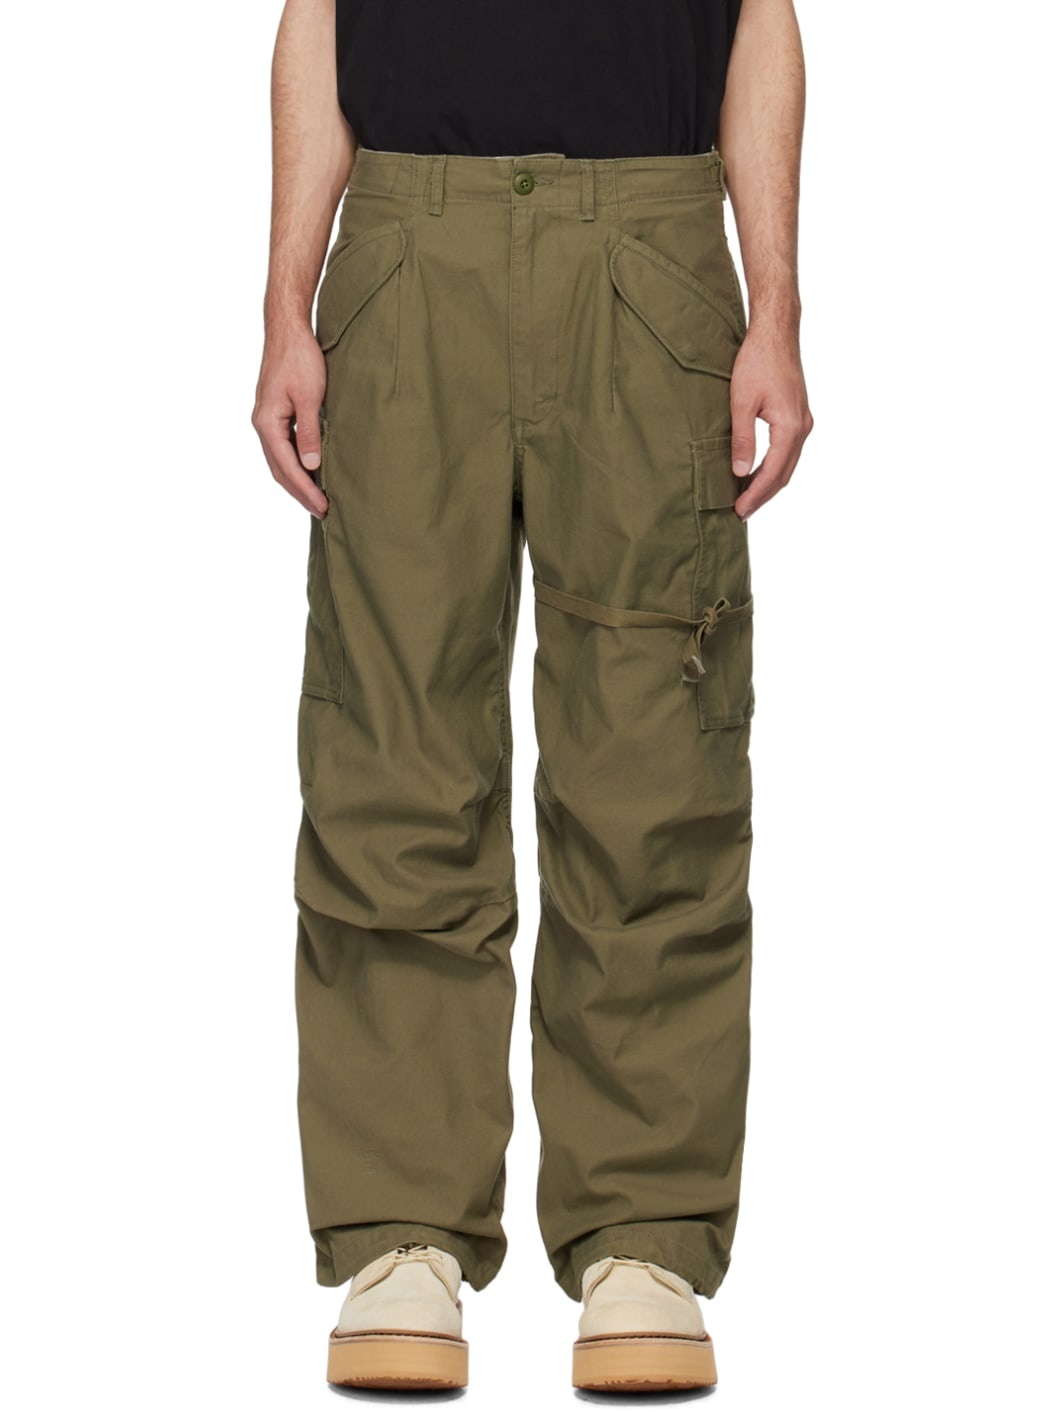 Khaki Mark Military Cargo Pants - 1